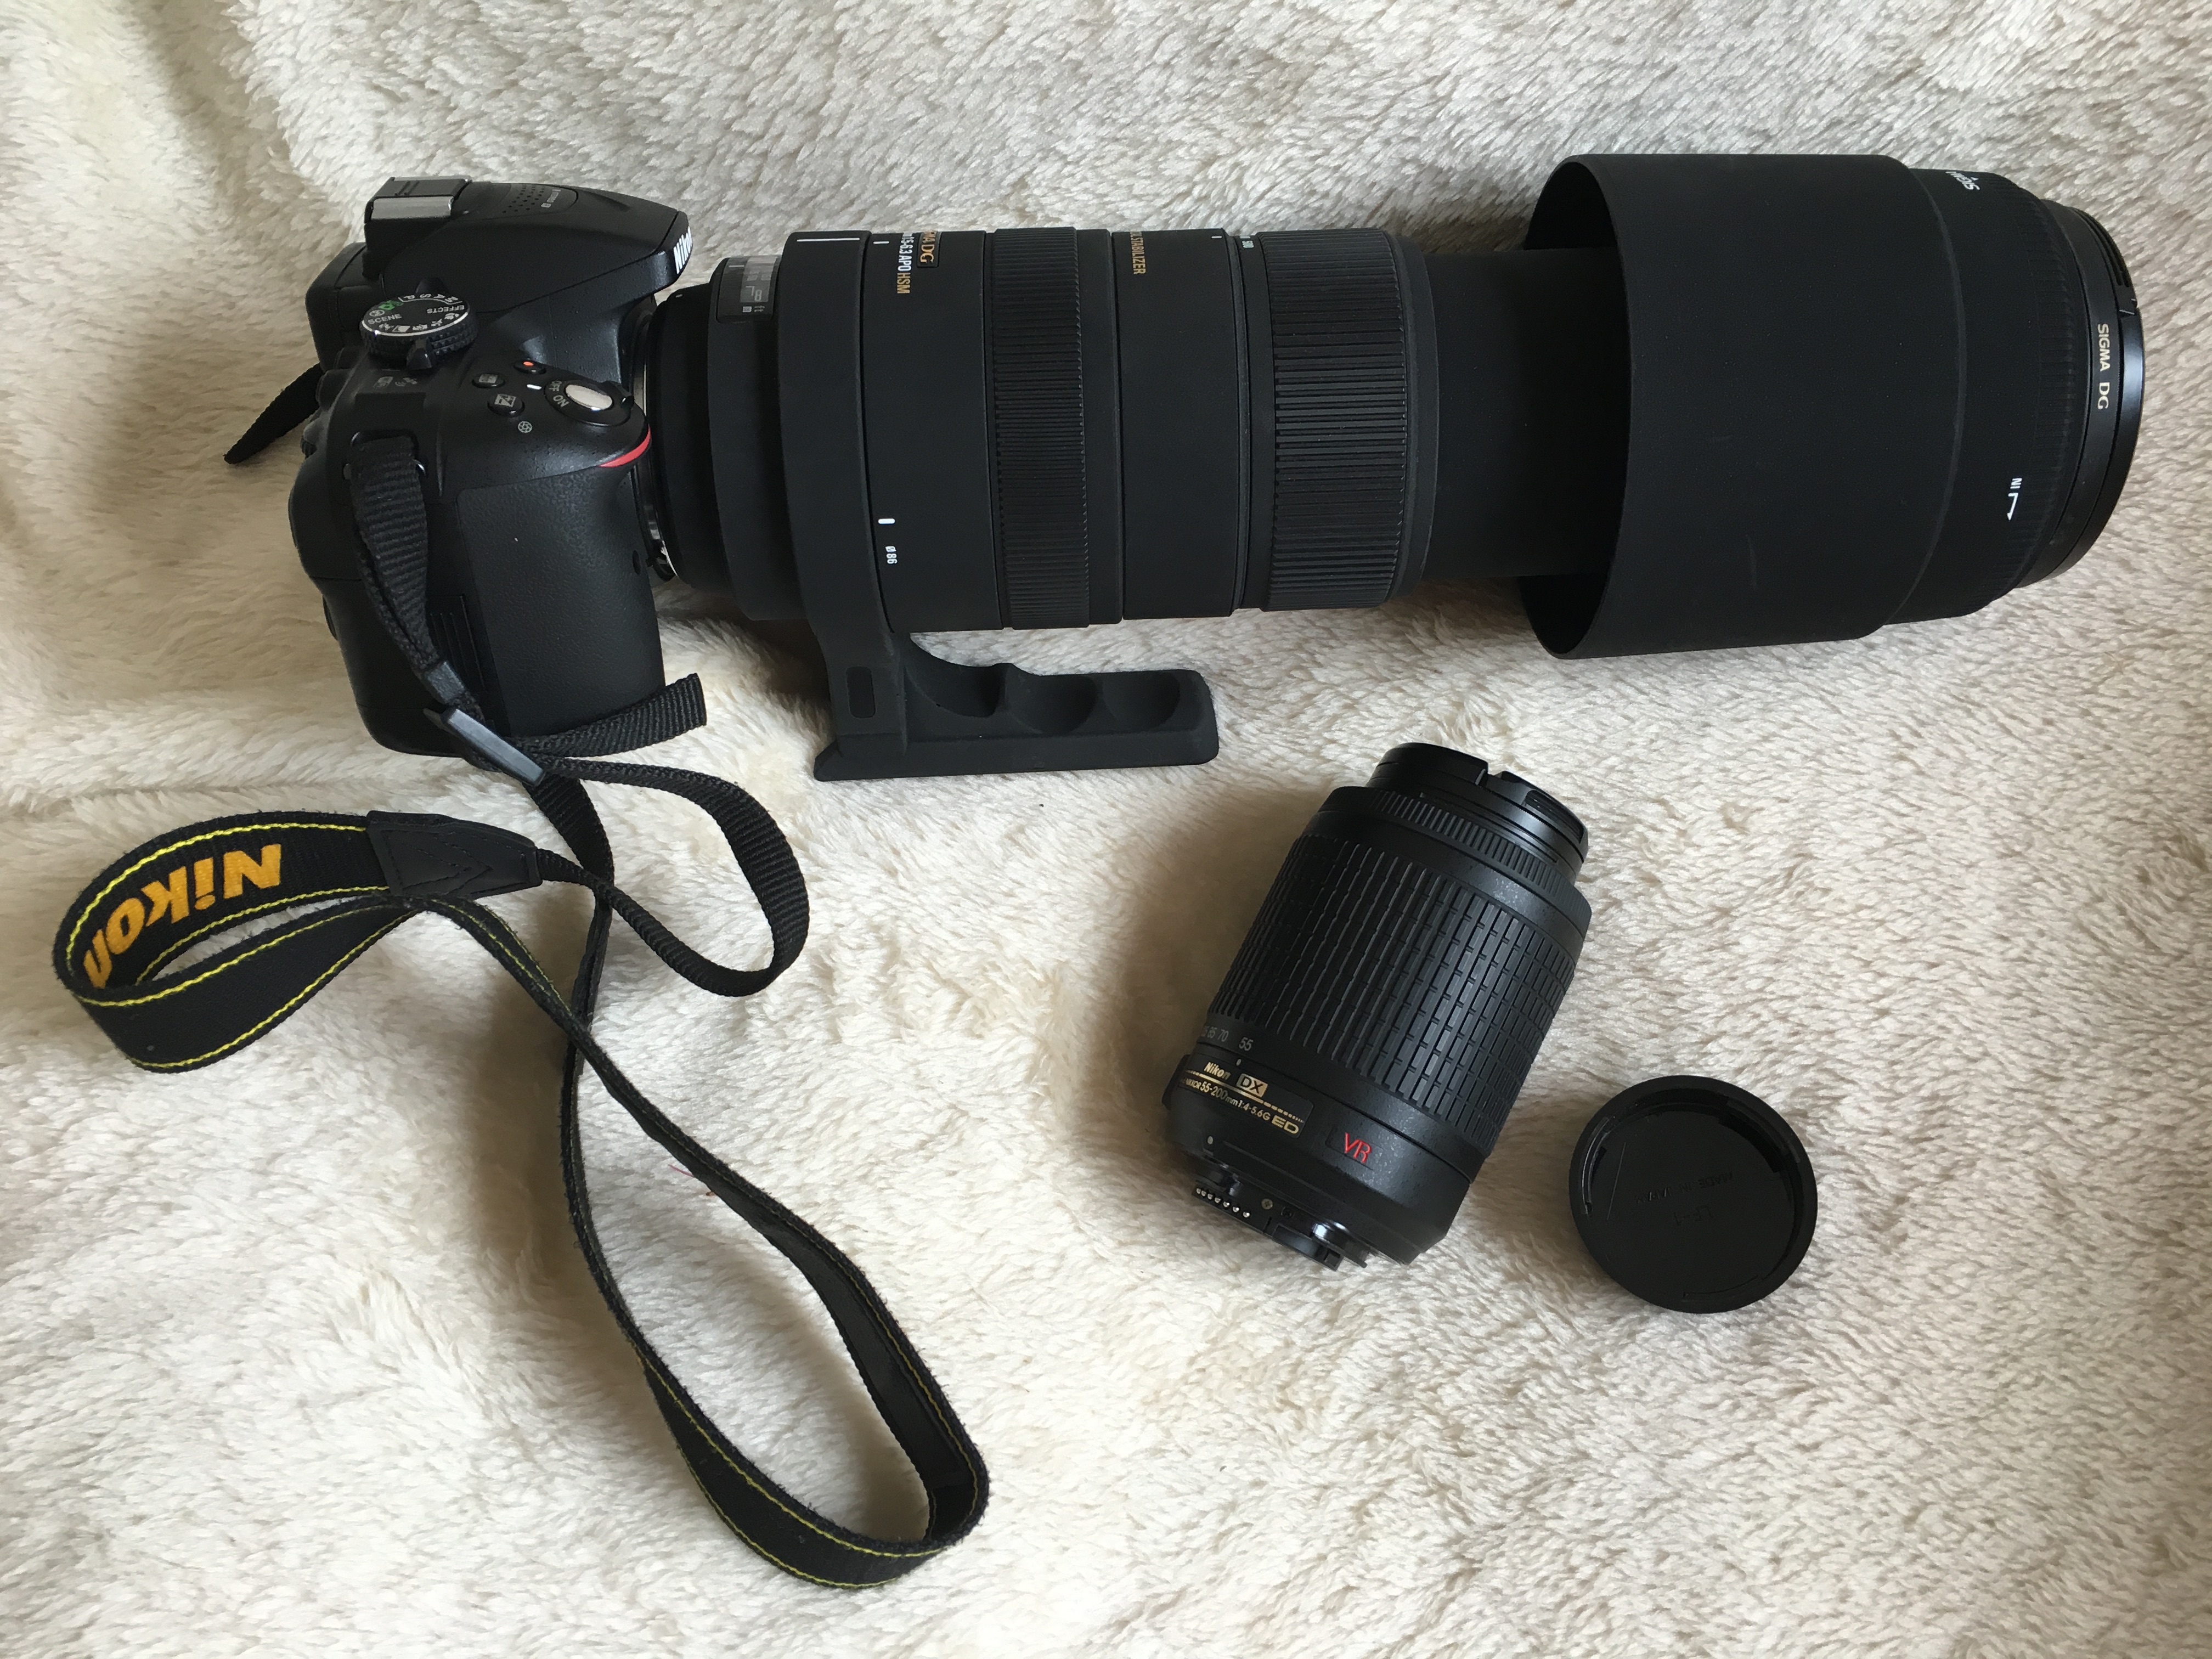 A 200mm Kit Lens vs A Sigma 150mm-500mm lens